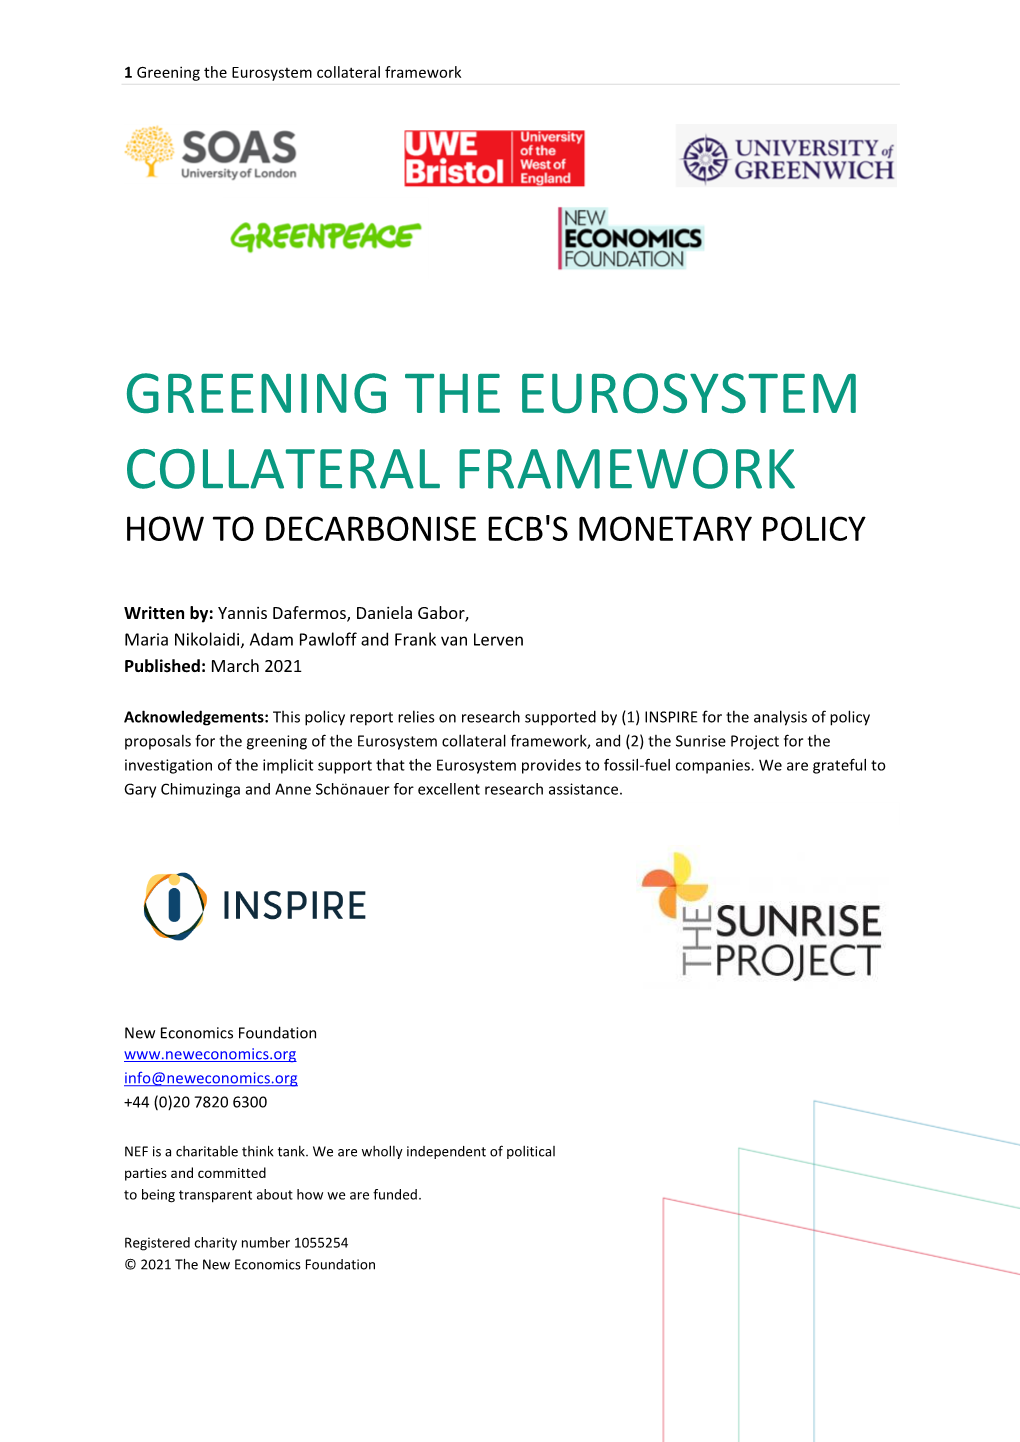 Greening the Eurosystem Collateral Framework